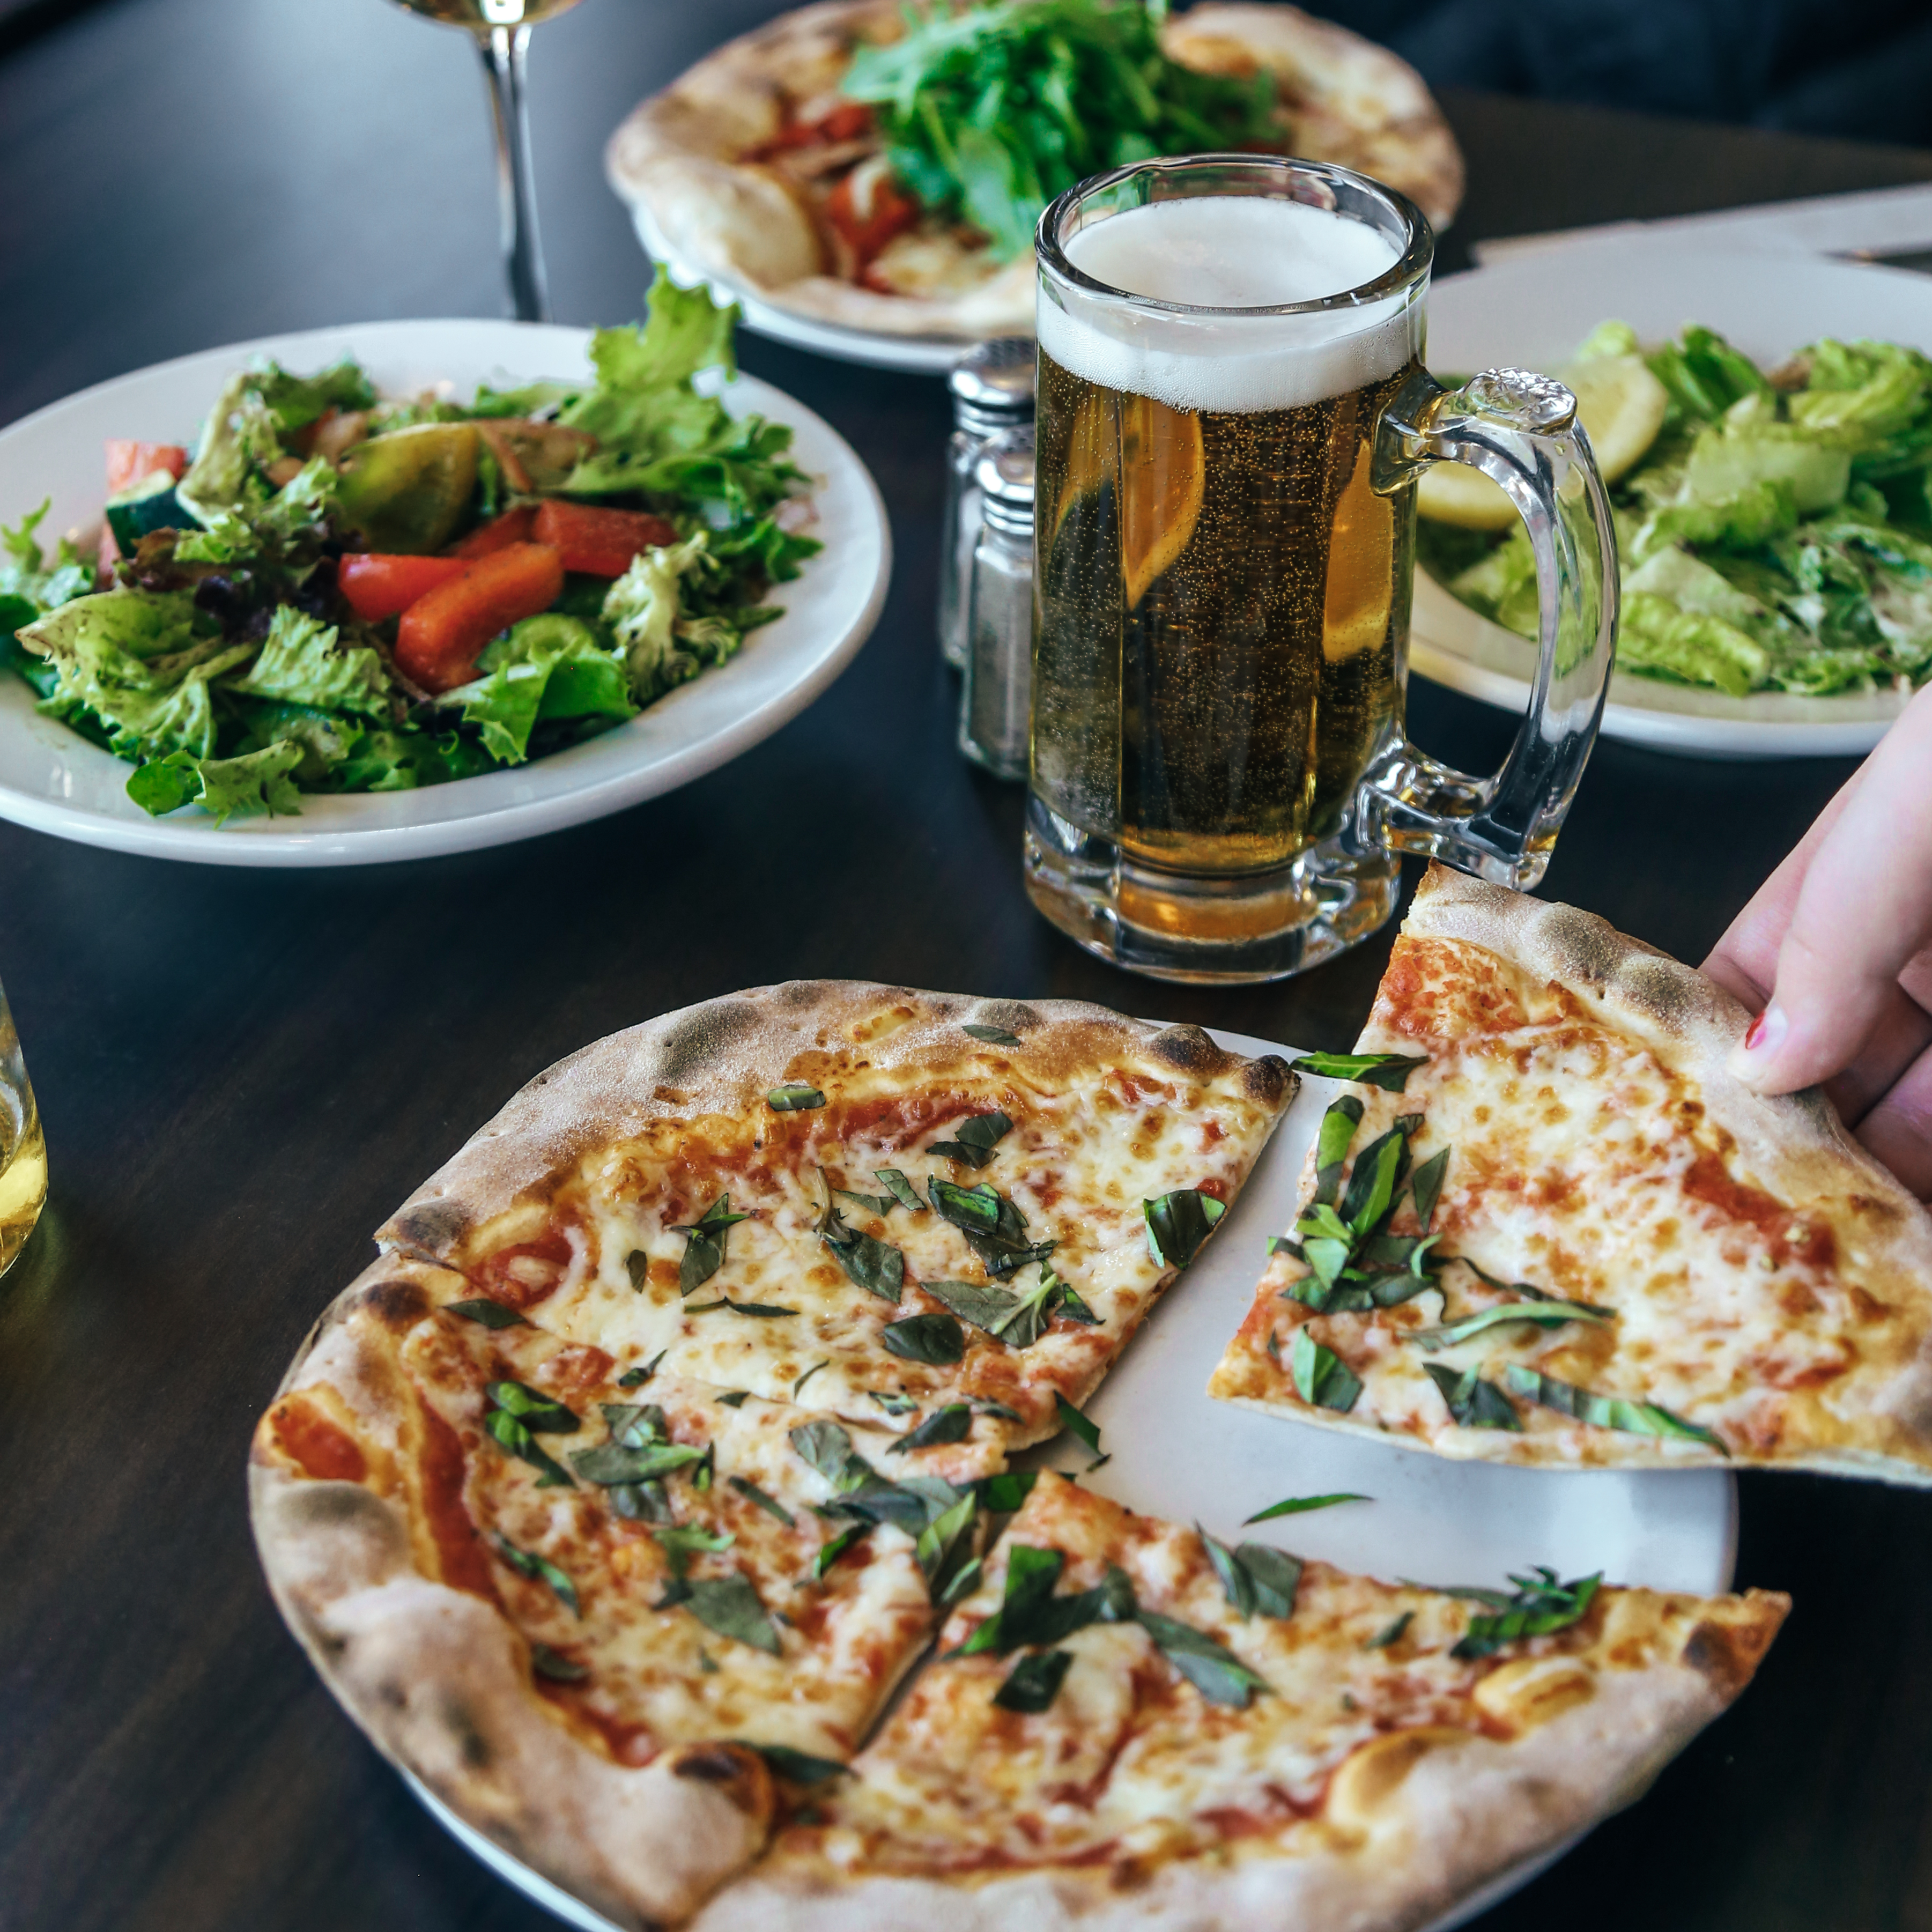 Pizza, salad and beer at La Piazza